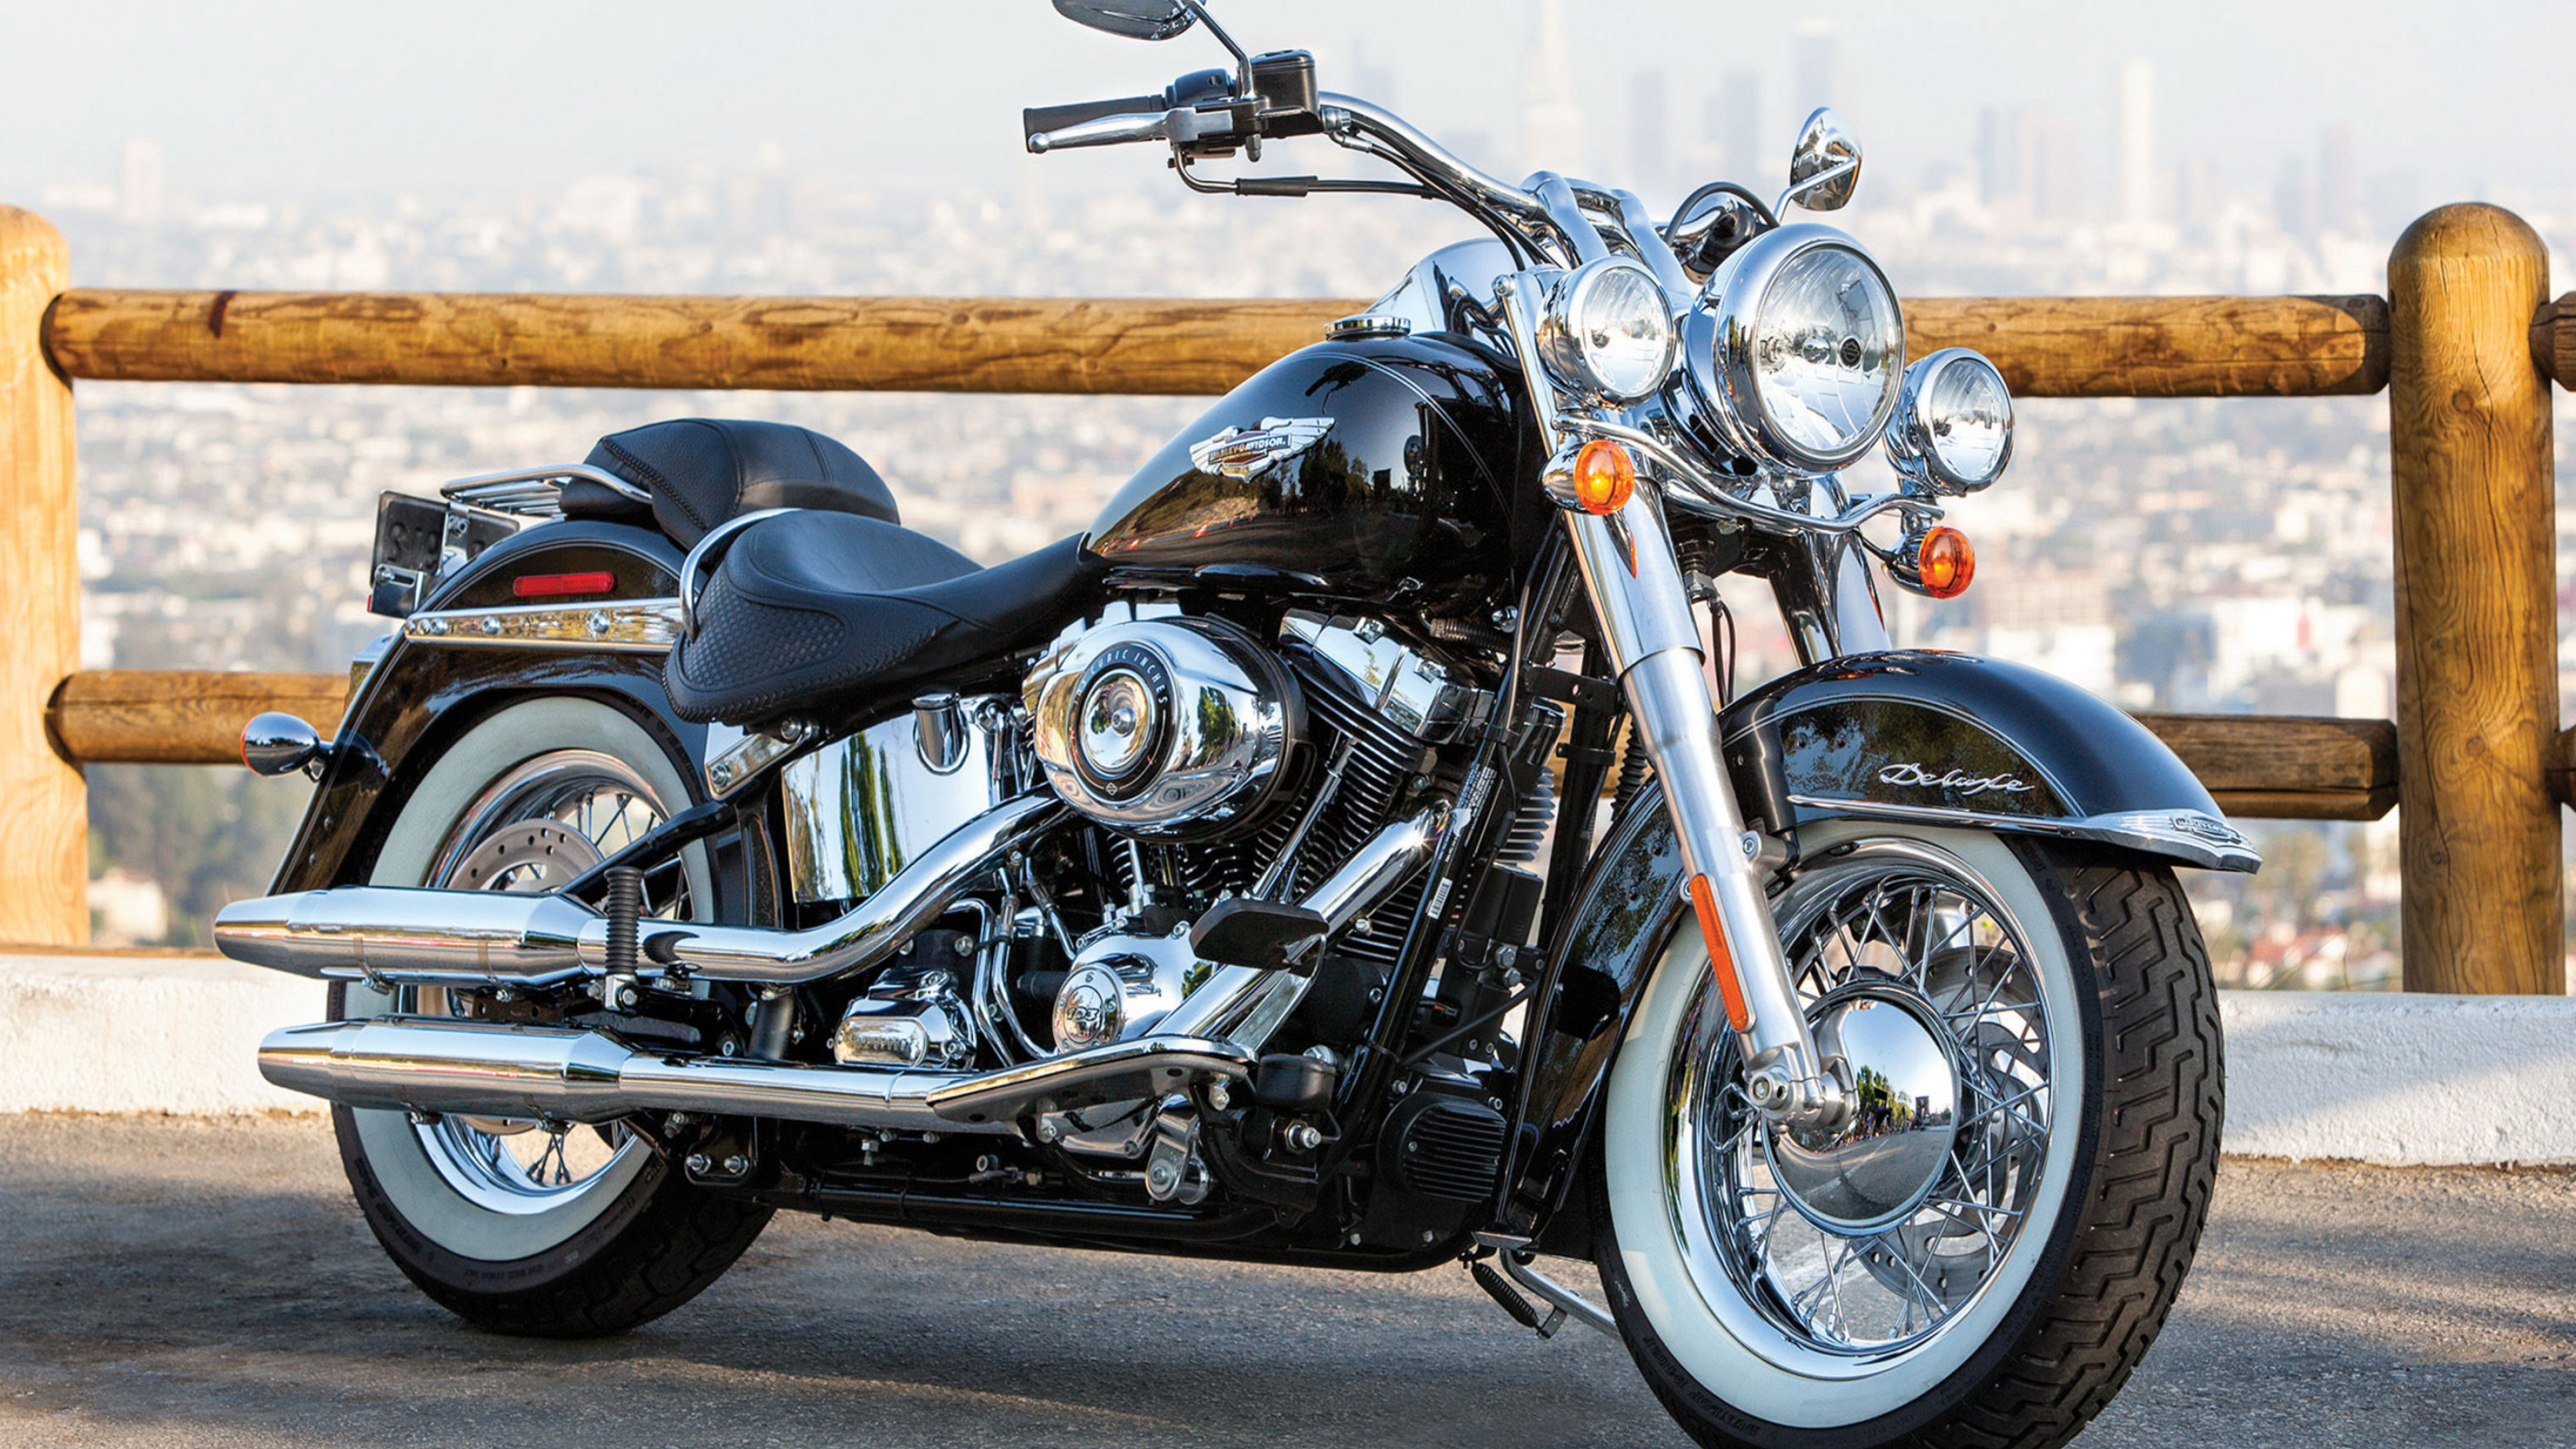 Harley-Davidson Softail motorcycle desktop wallpapers 4K Ultra HD 3840x2160